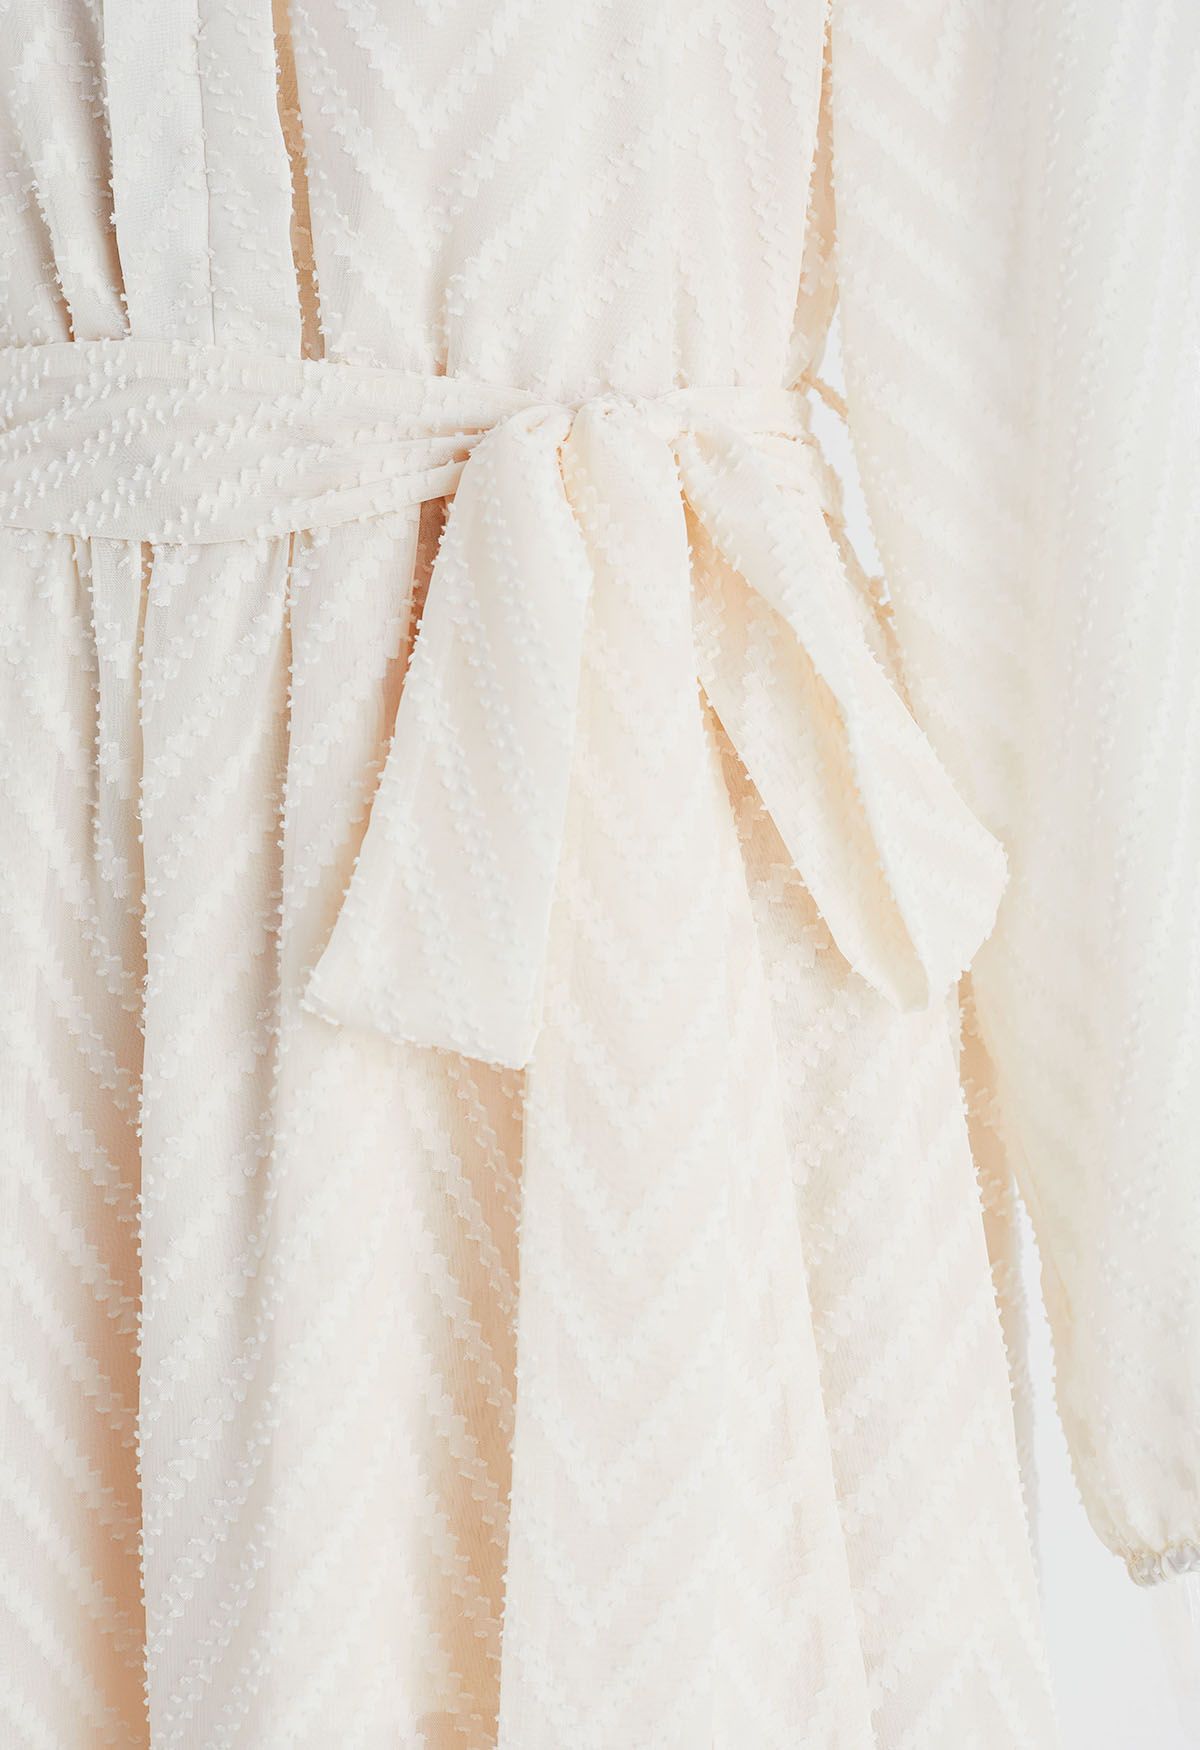 Zigzag Flock Dot Tie Waist Midi Dress in Cream